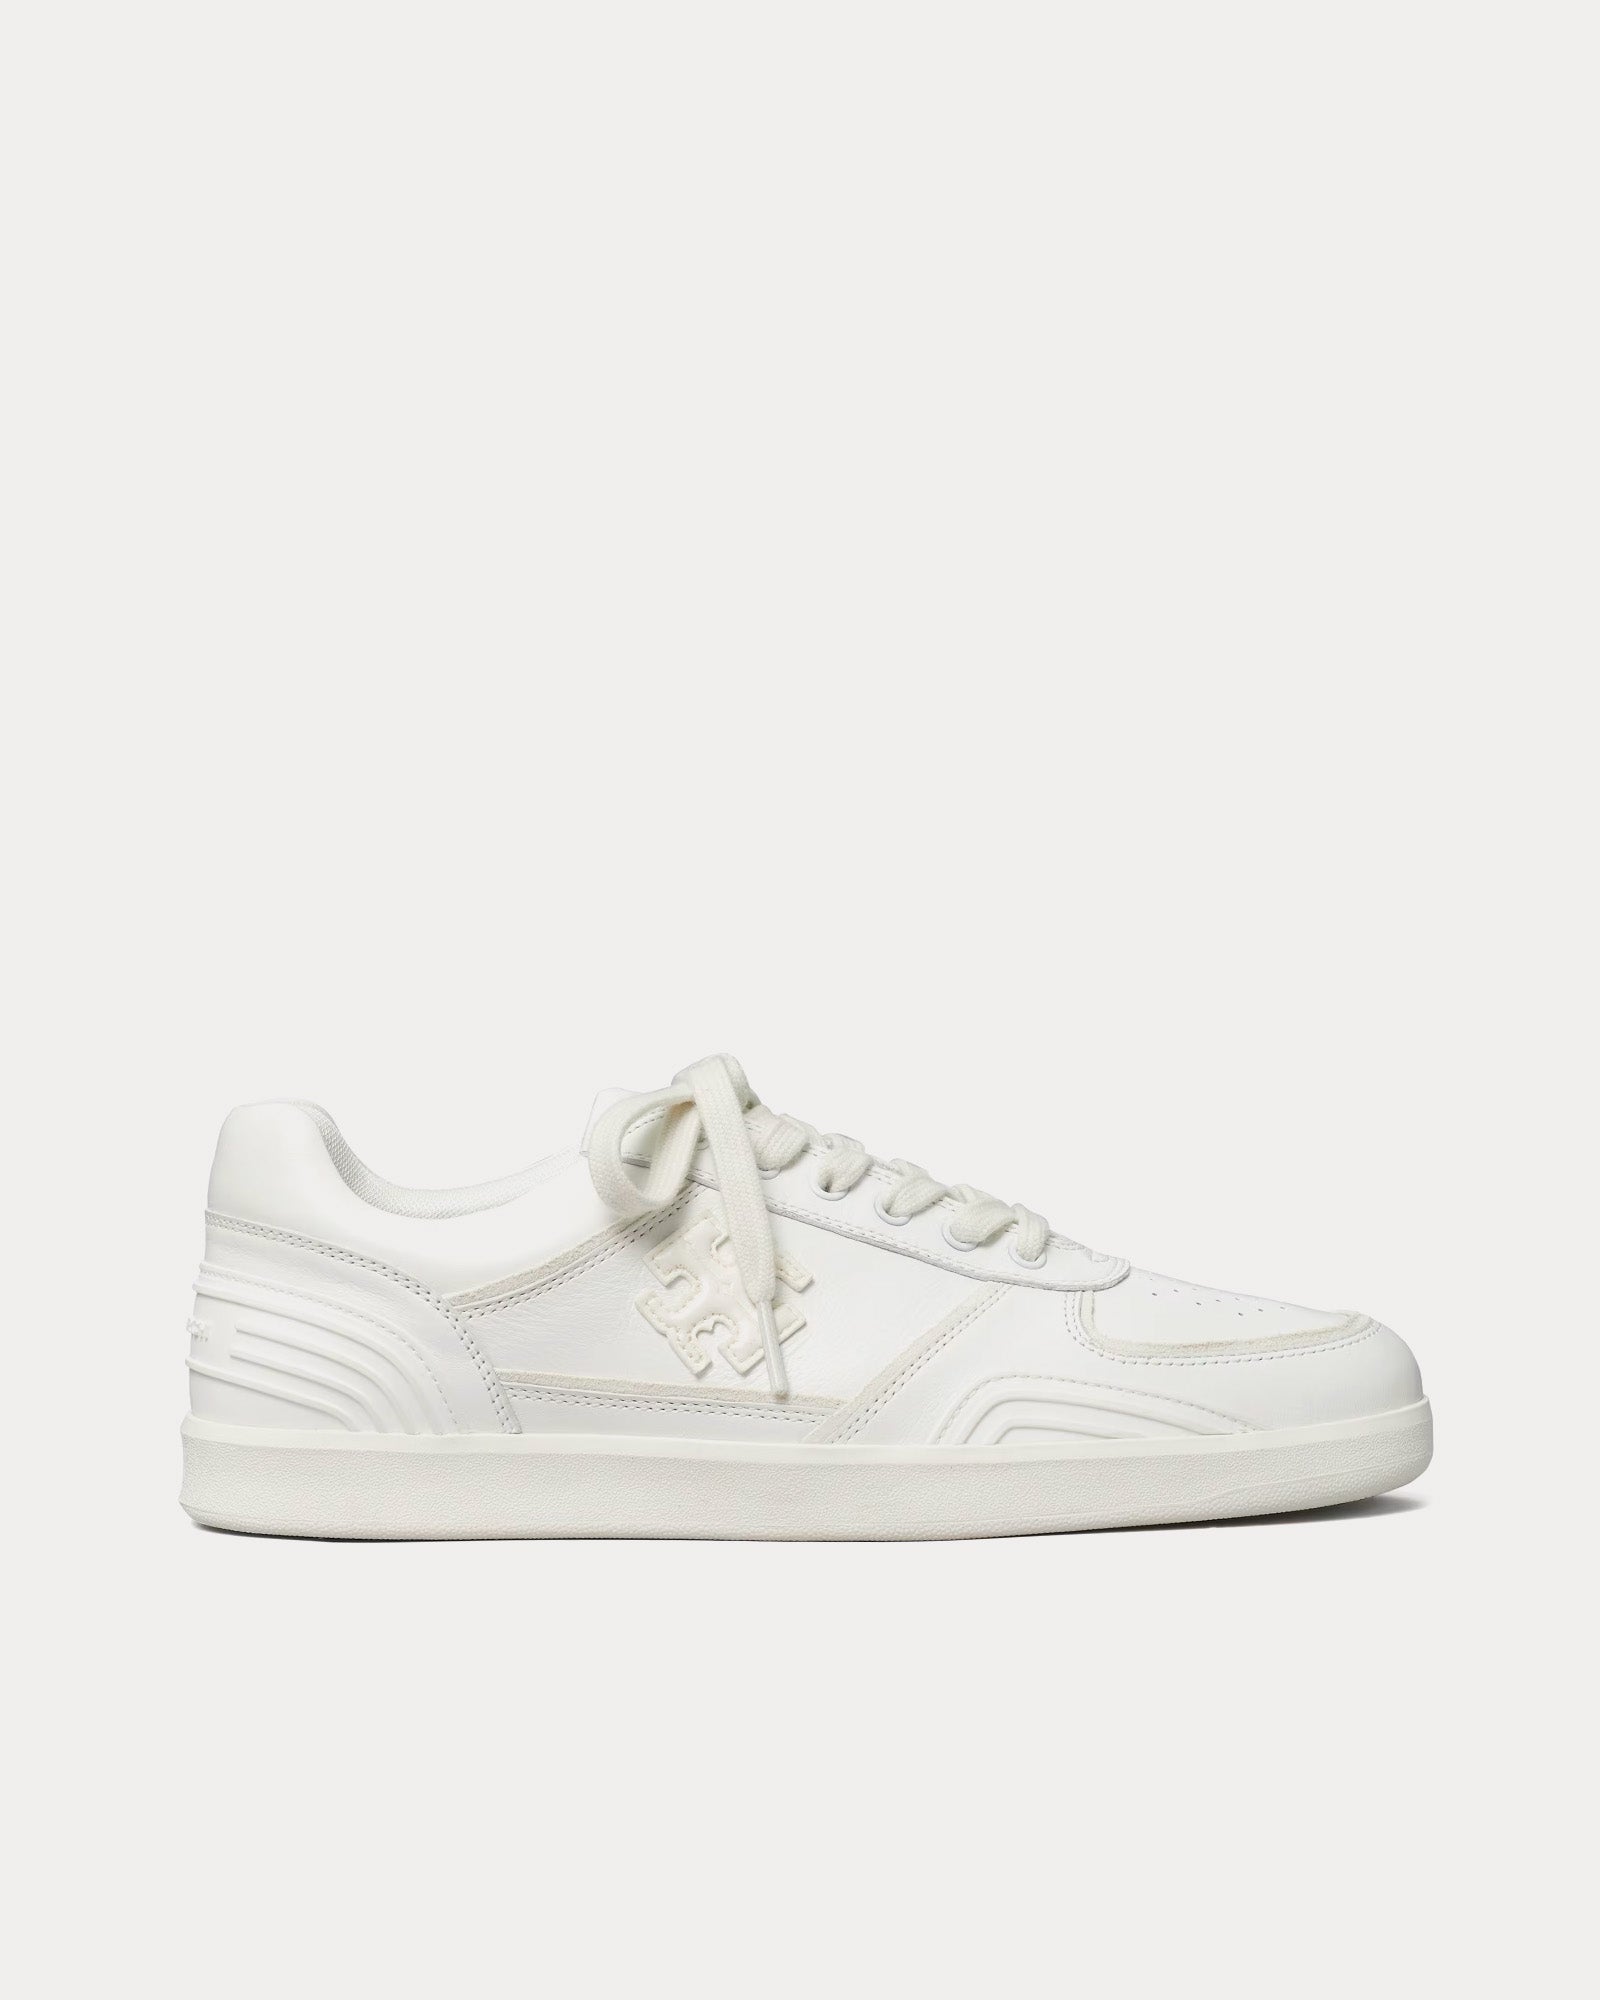 Tory Burch - Clover Court Titanium White / Titanium White Low Top Sneakers